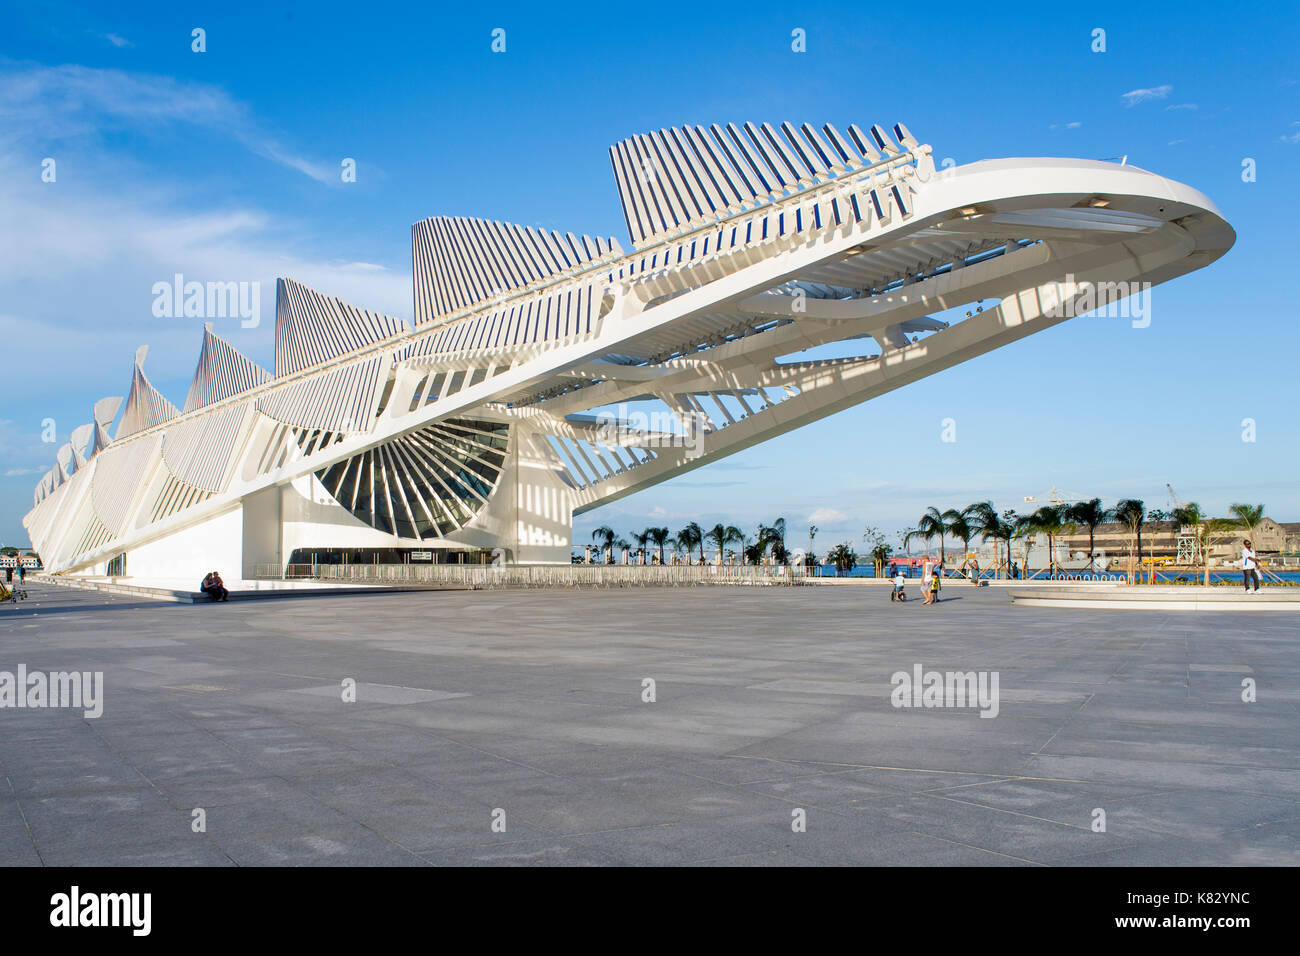 El Museu do Amanha (Museo de mañana) por Santiago Calatrava abrió en diciembre de 2015, Río de Janeiro, Brasil, América del Sur Foto de stock